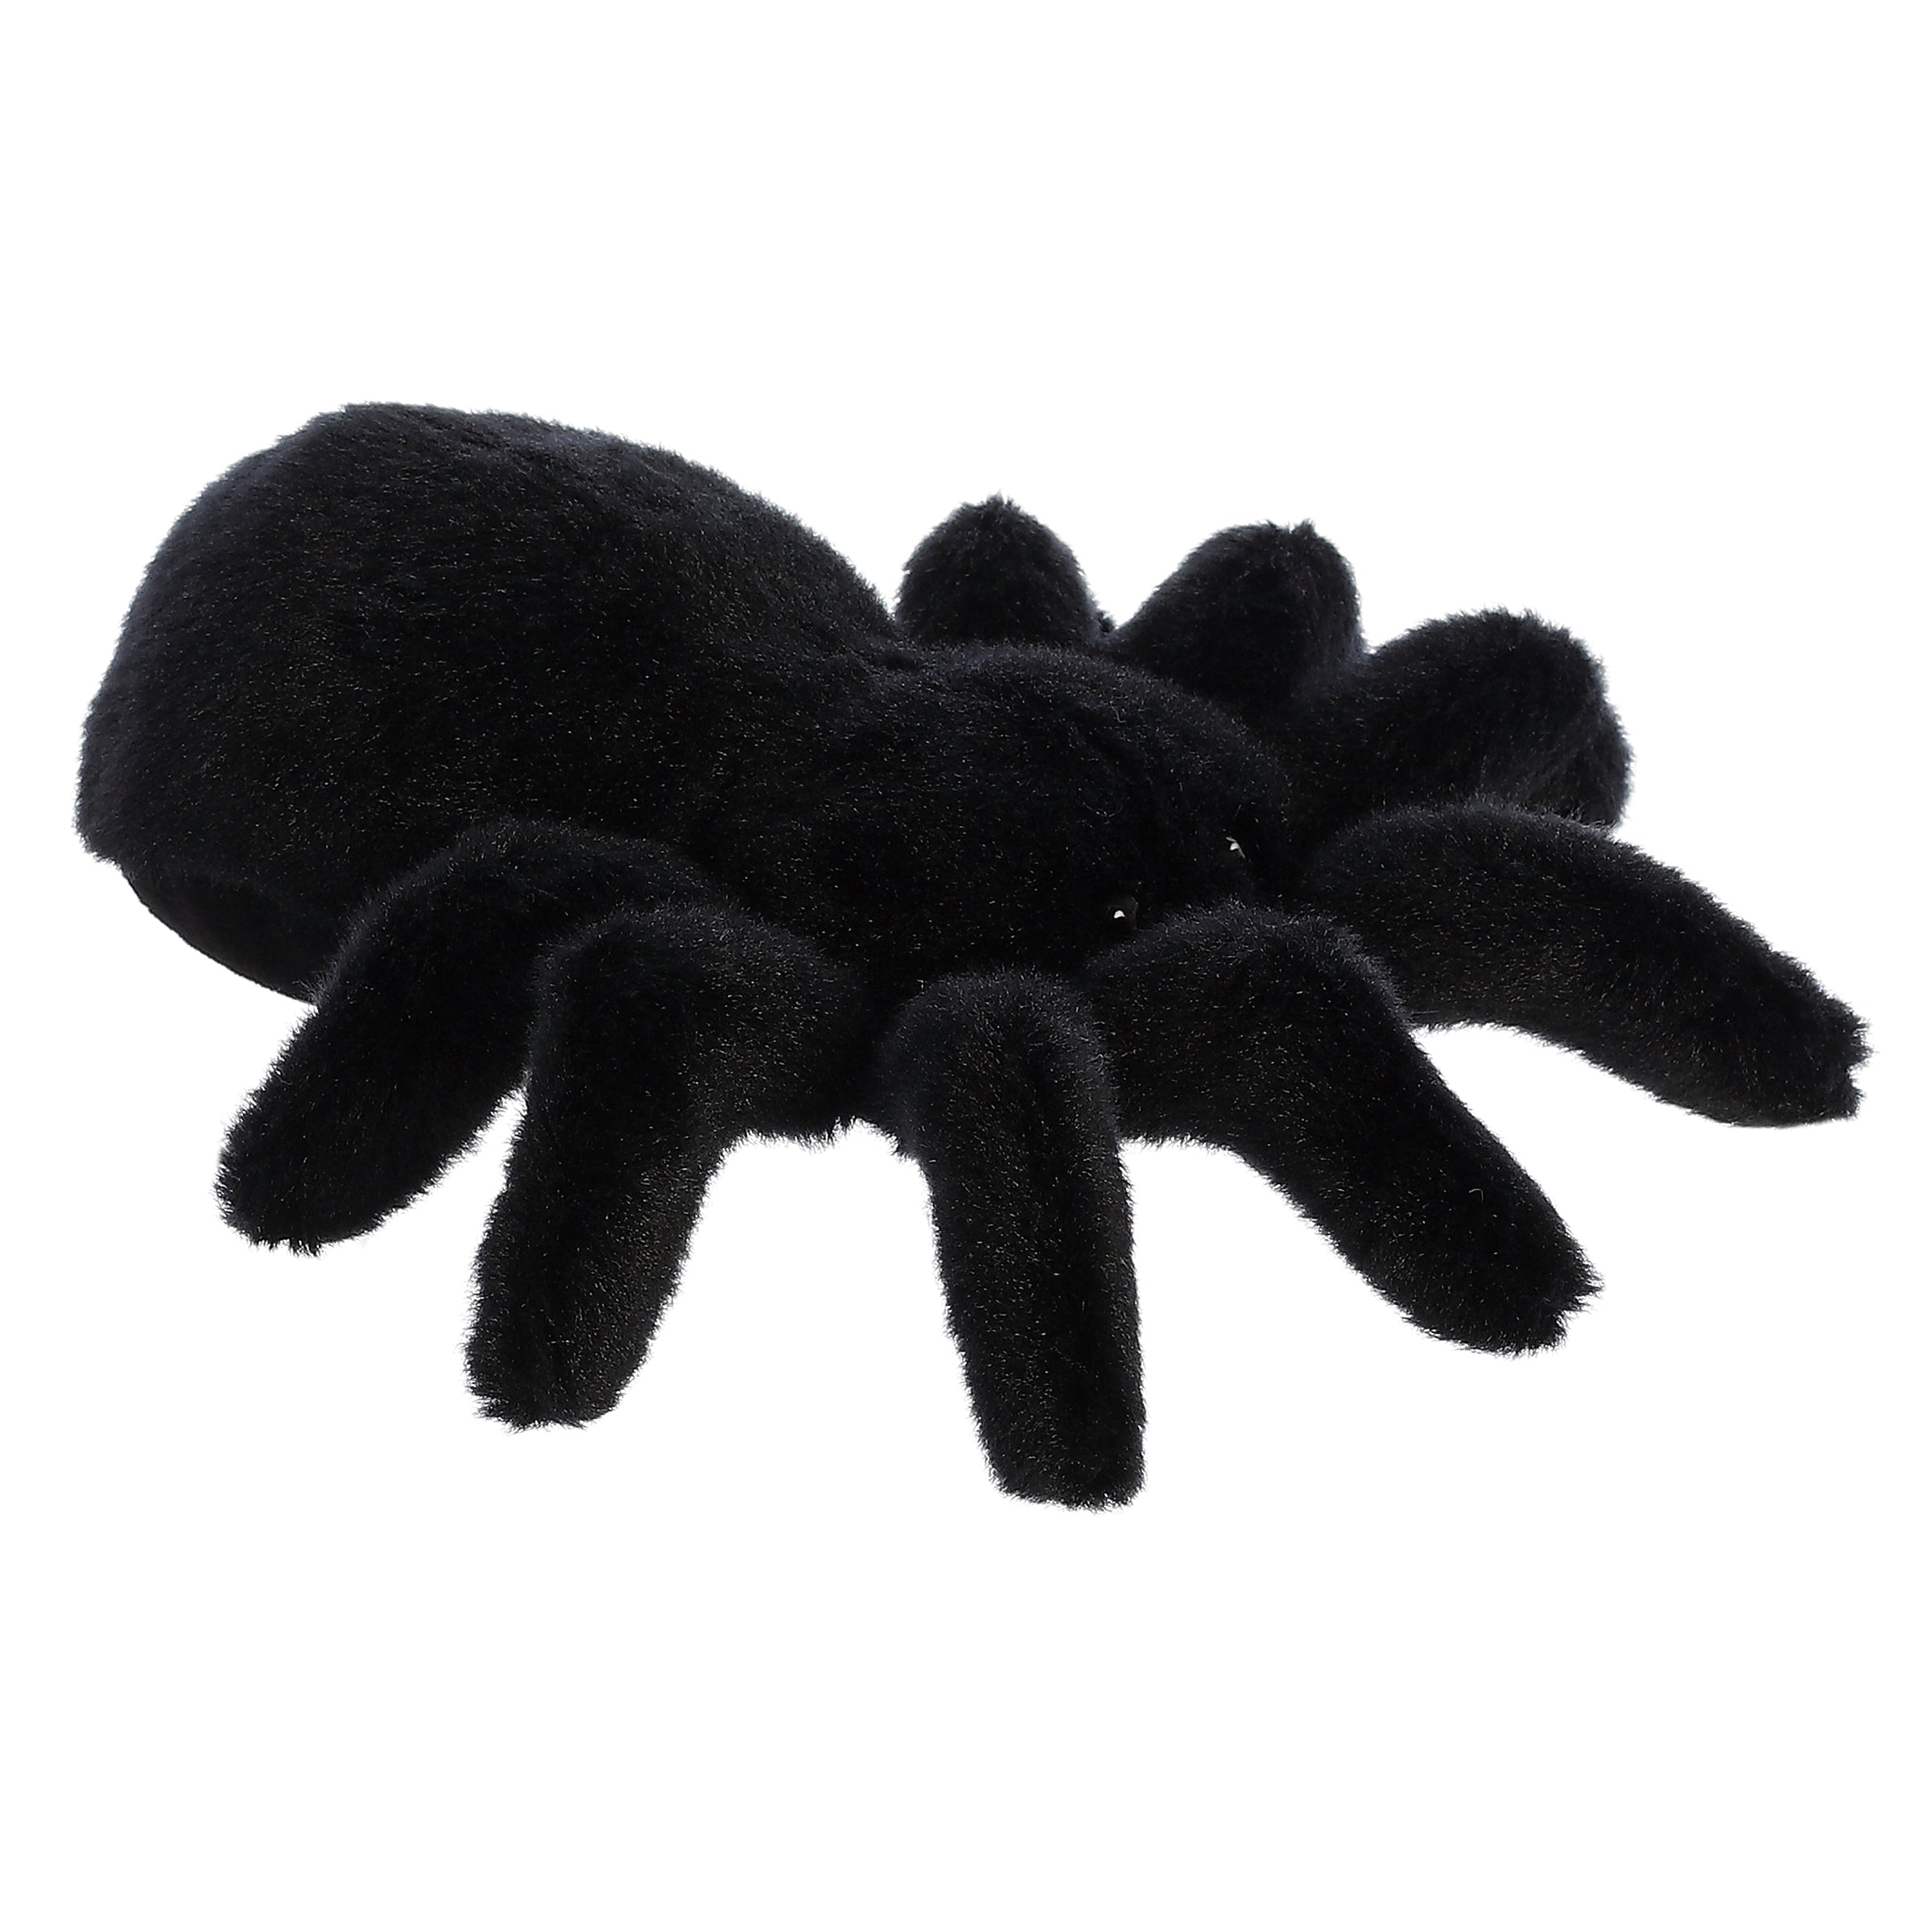 tarantula stuffed animal